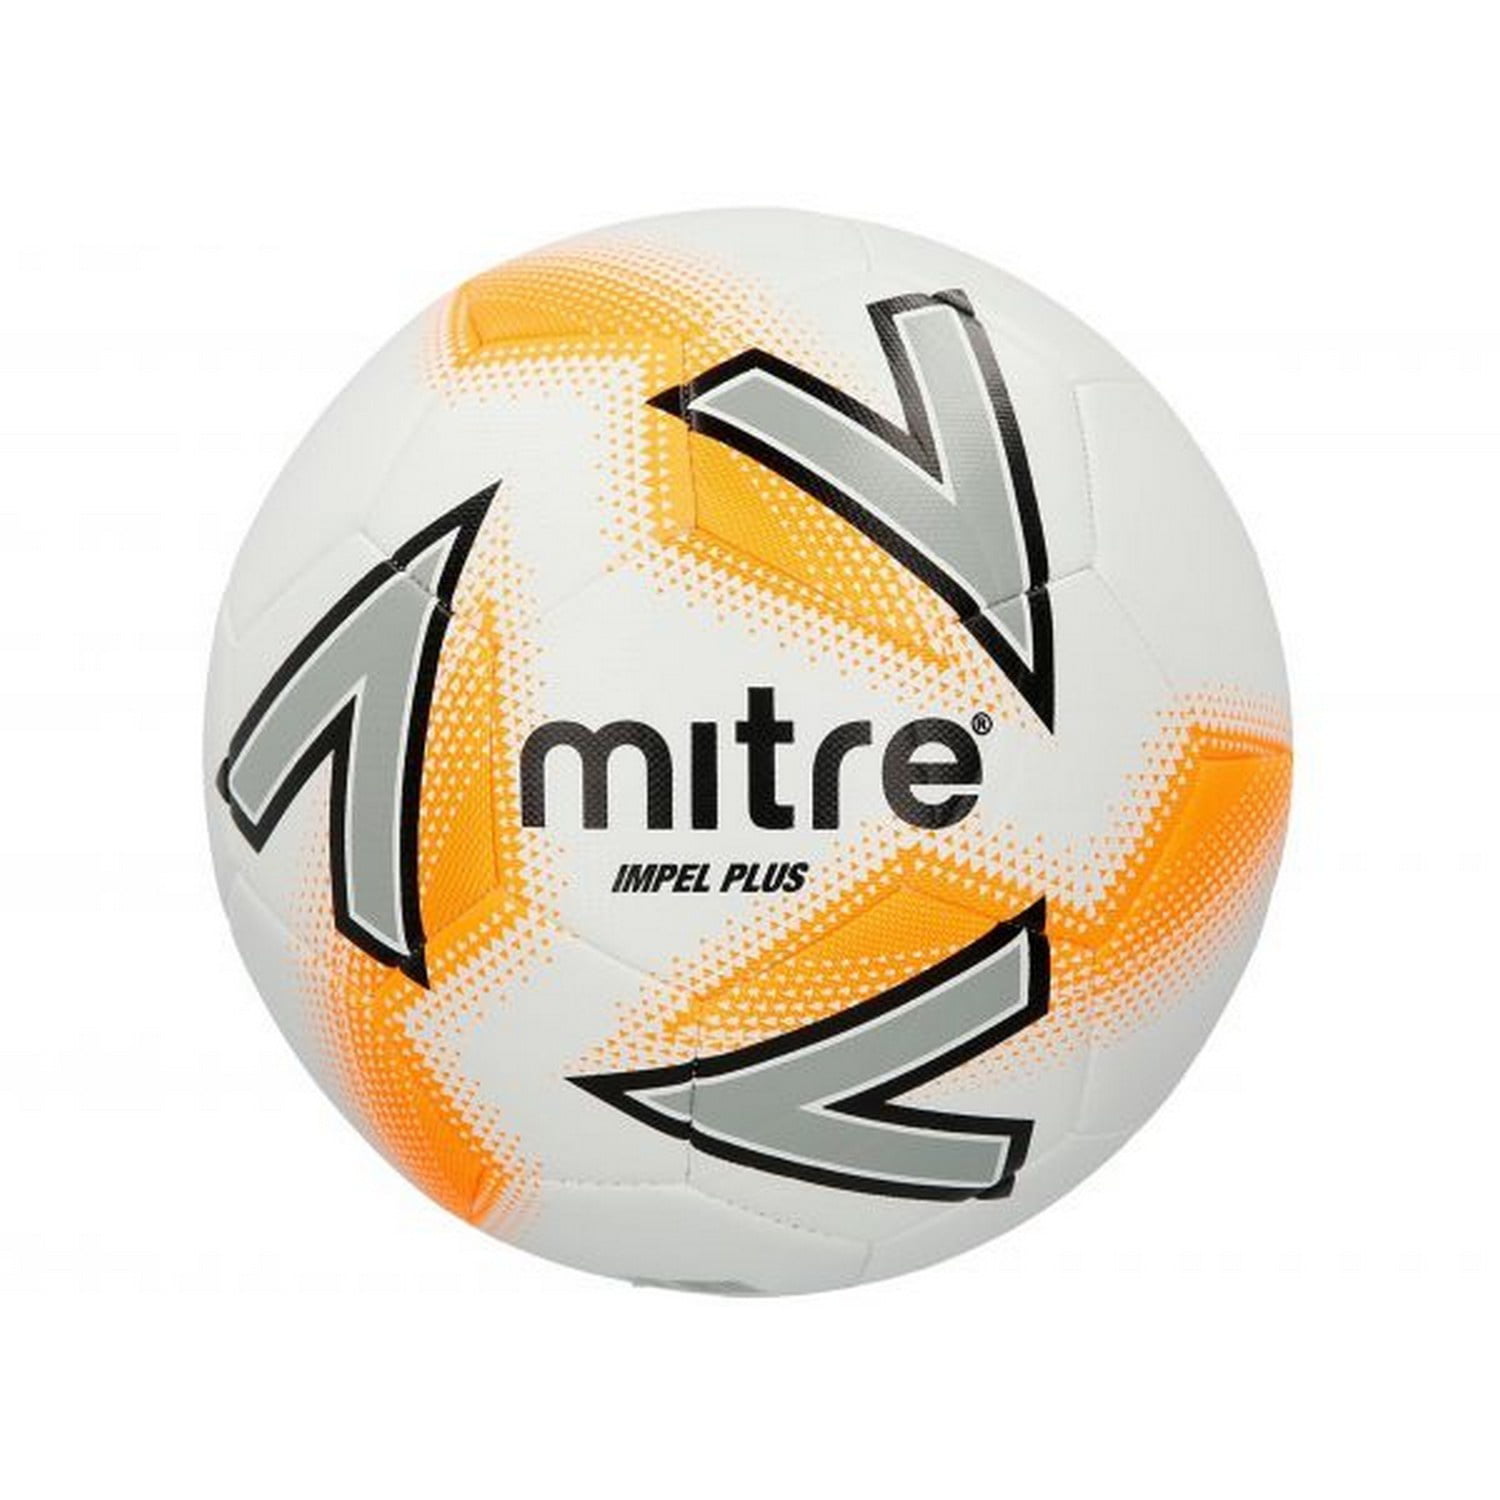 Mitre Football Ball Impel Plus Training Footballs Soccer Balls Size 4 Brand New 